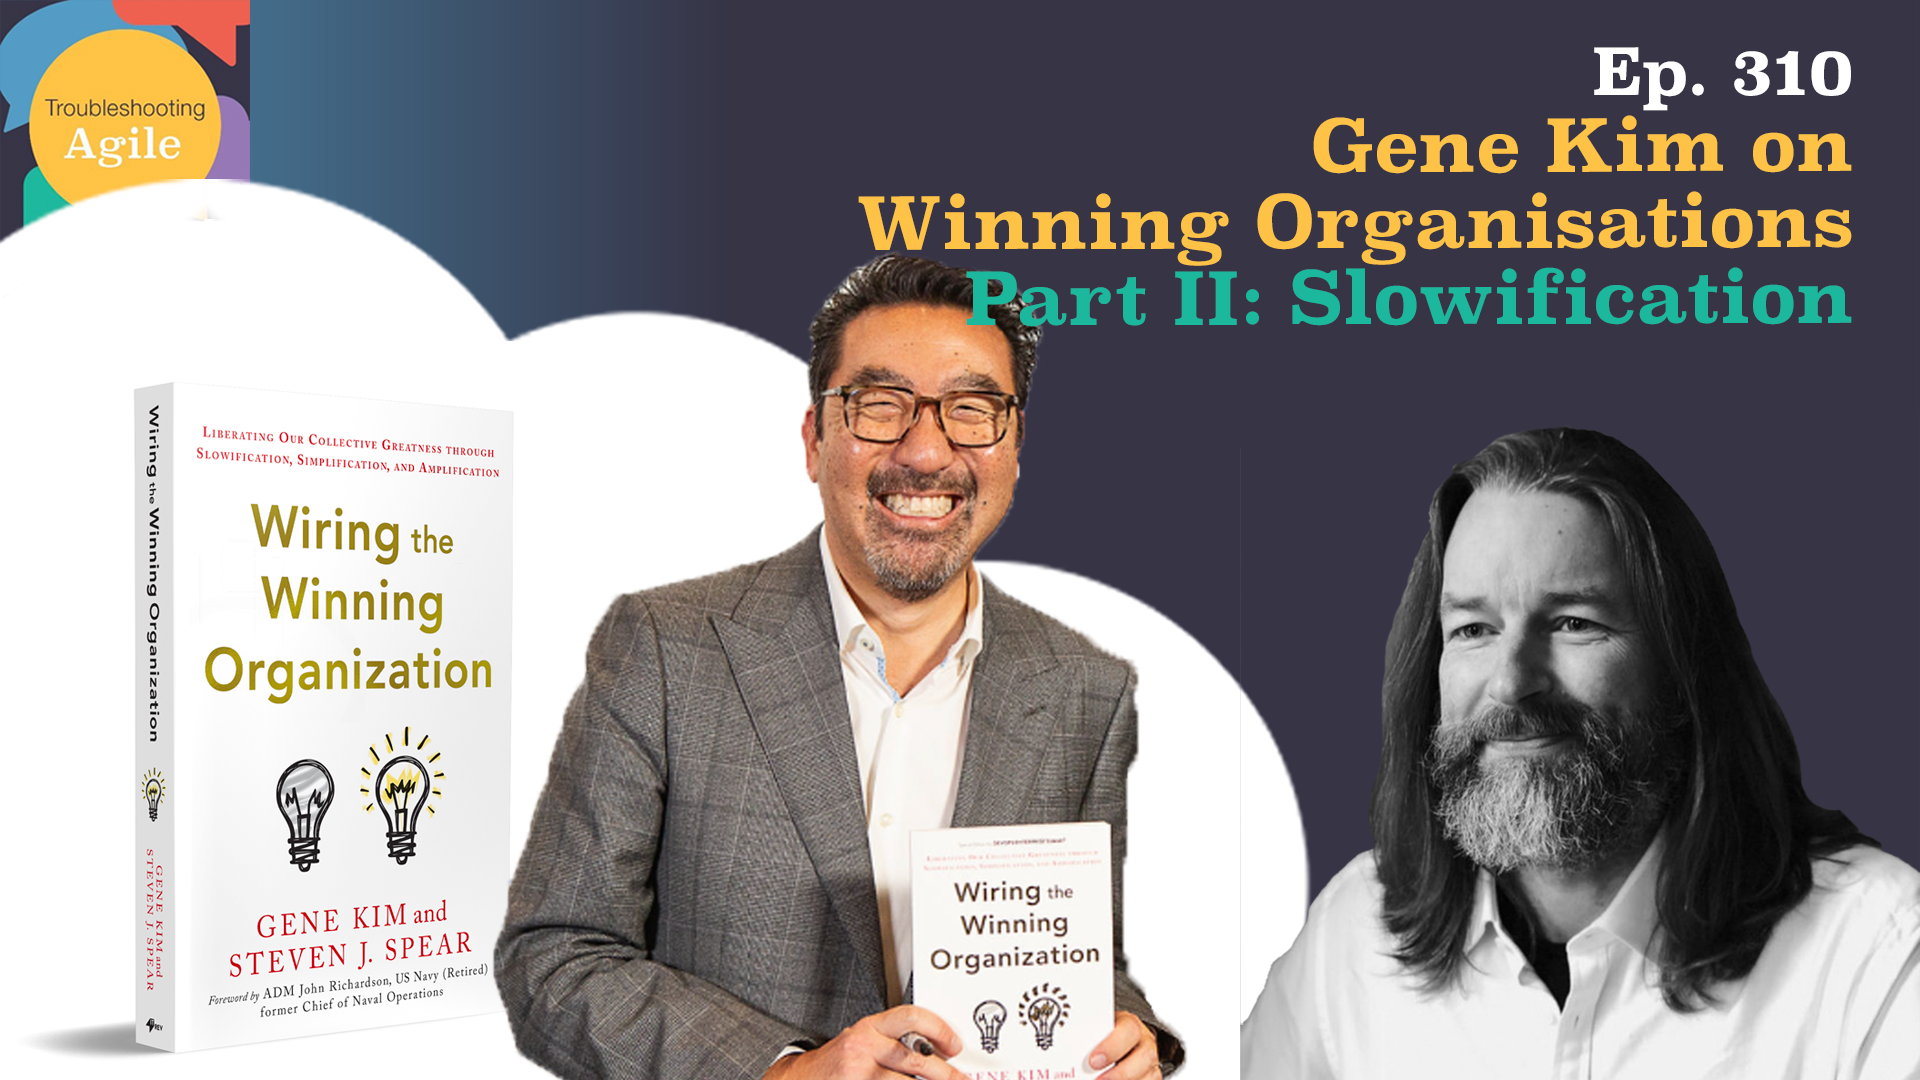 Gene Kim on Winning Organisations Part 2 - Slowification